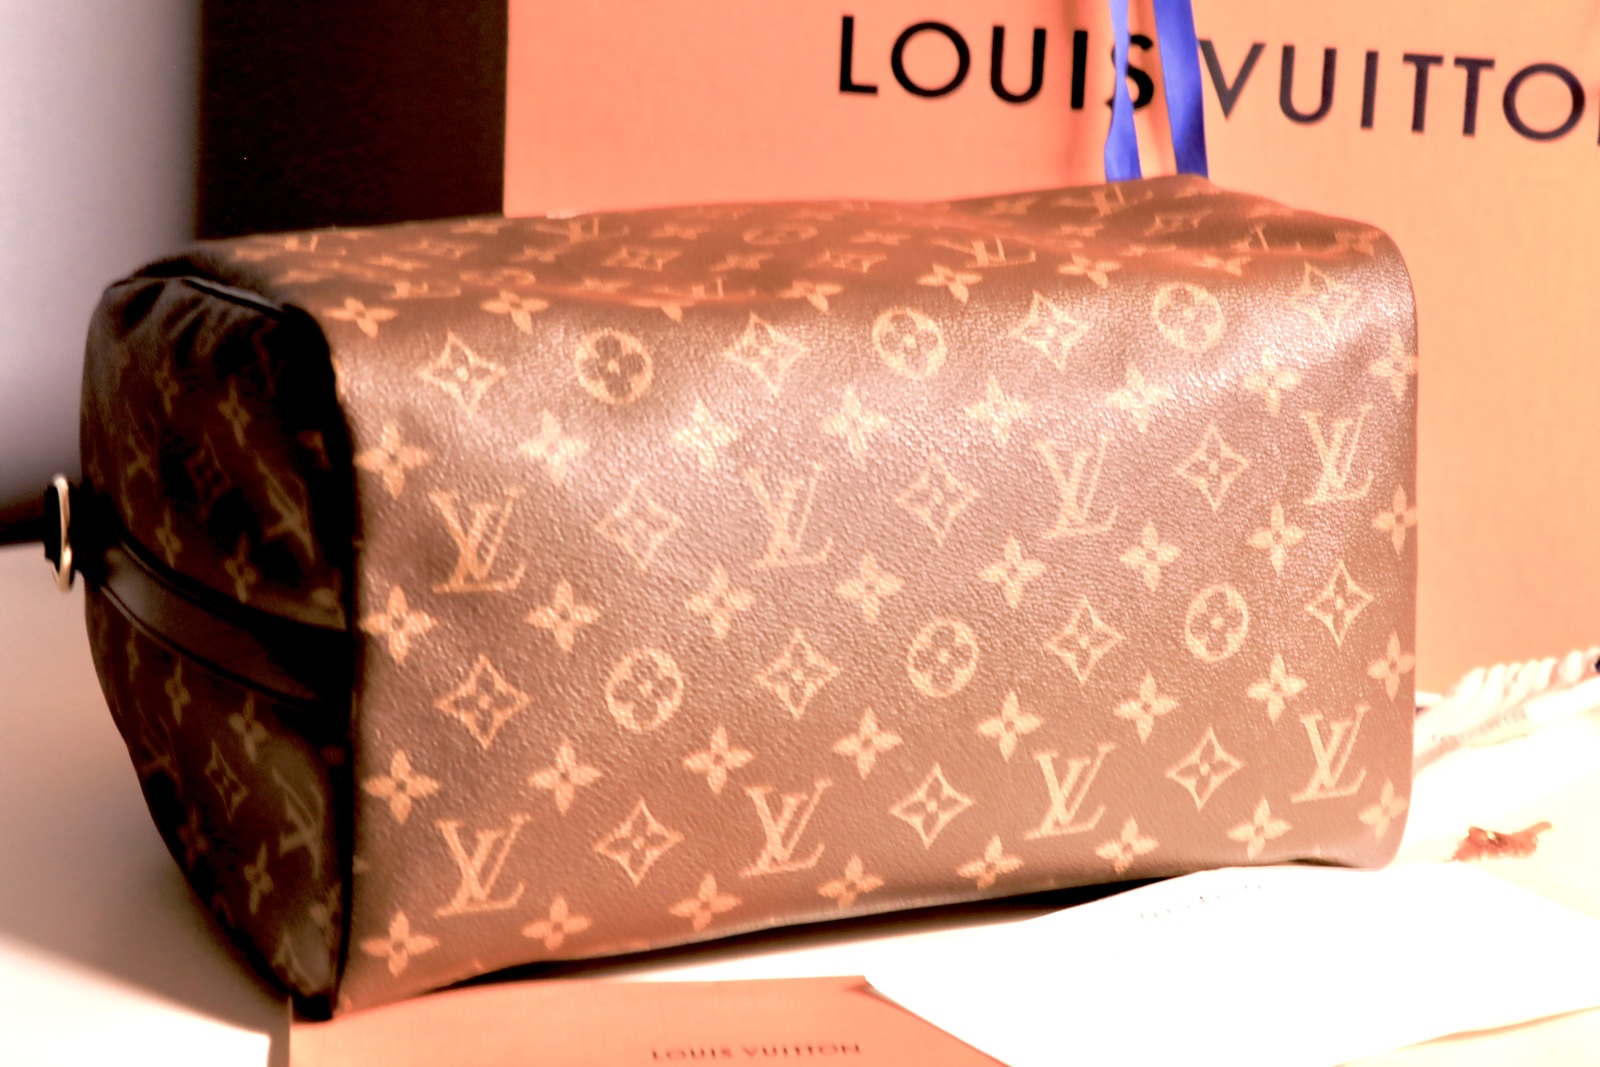 Louis Vuitton My LV World Tour Speedy Bandoulière 30 - Ann's Fabulous  Closeouts